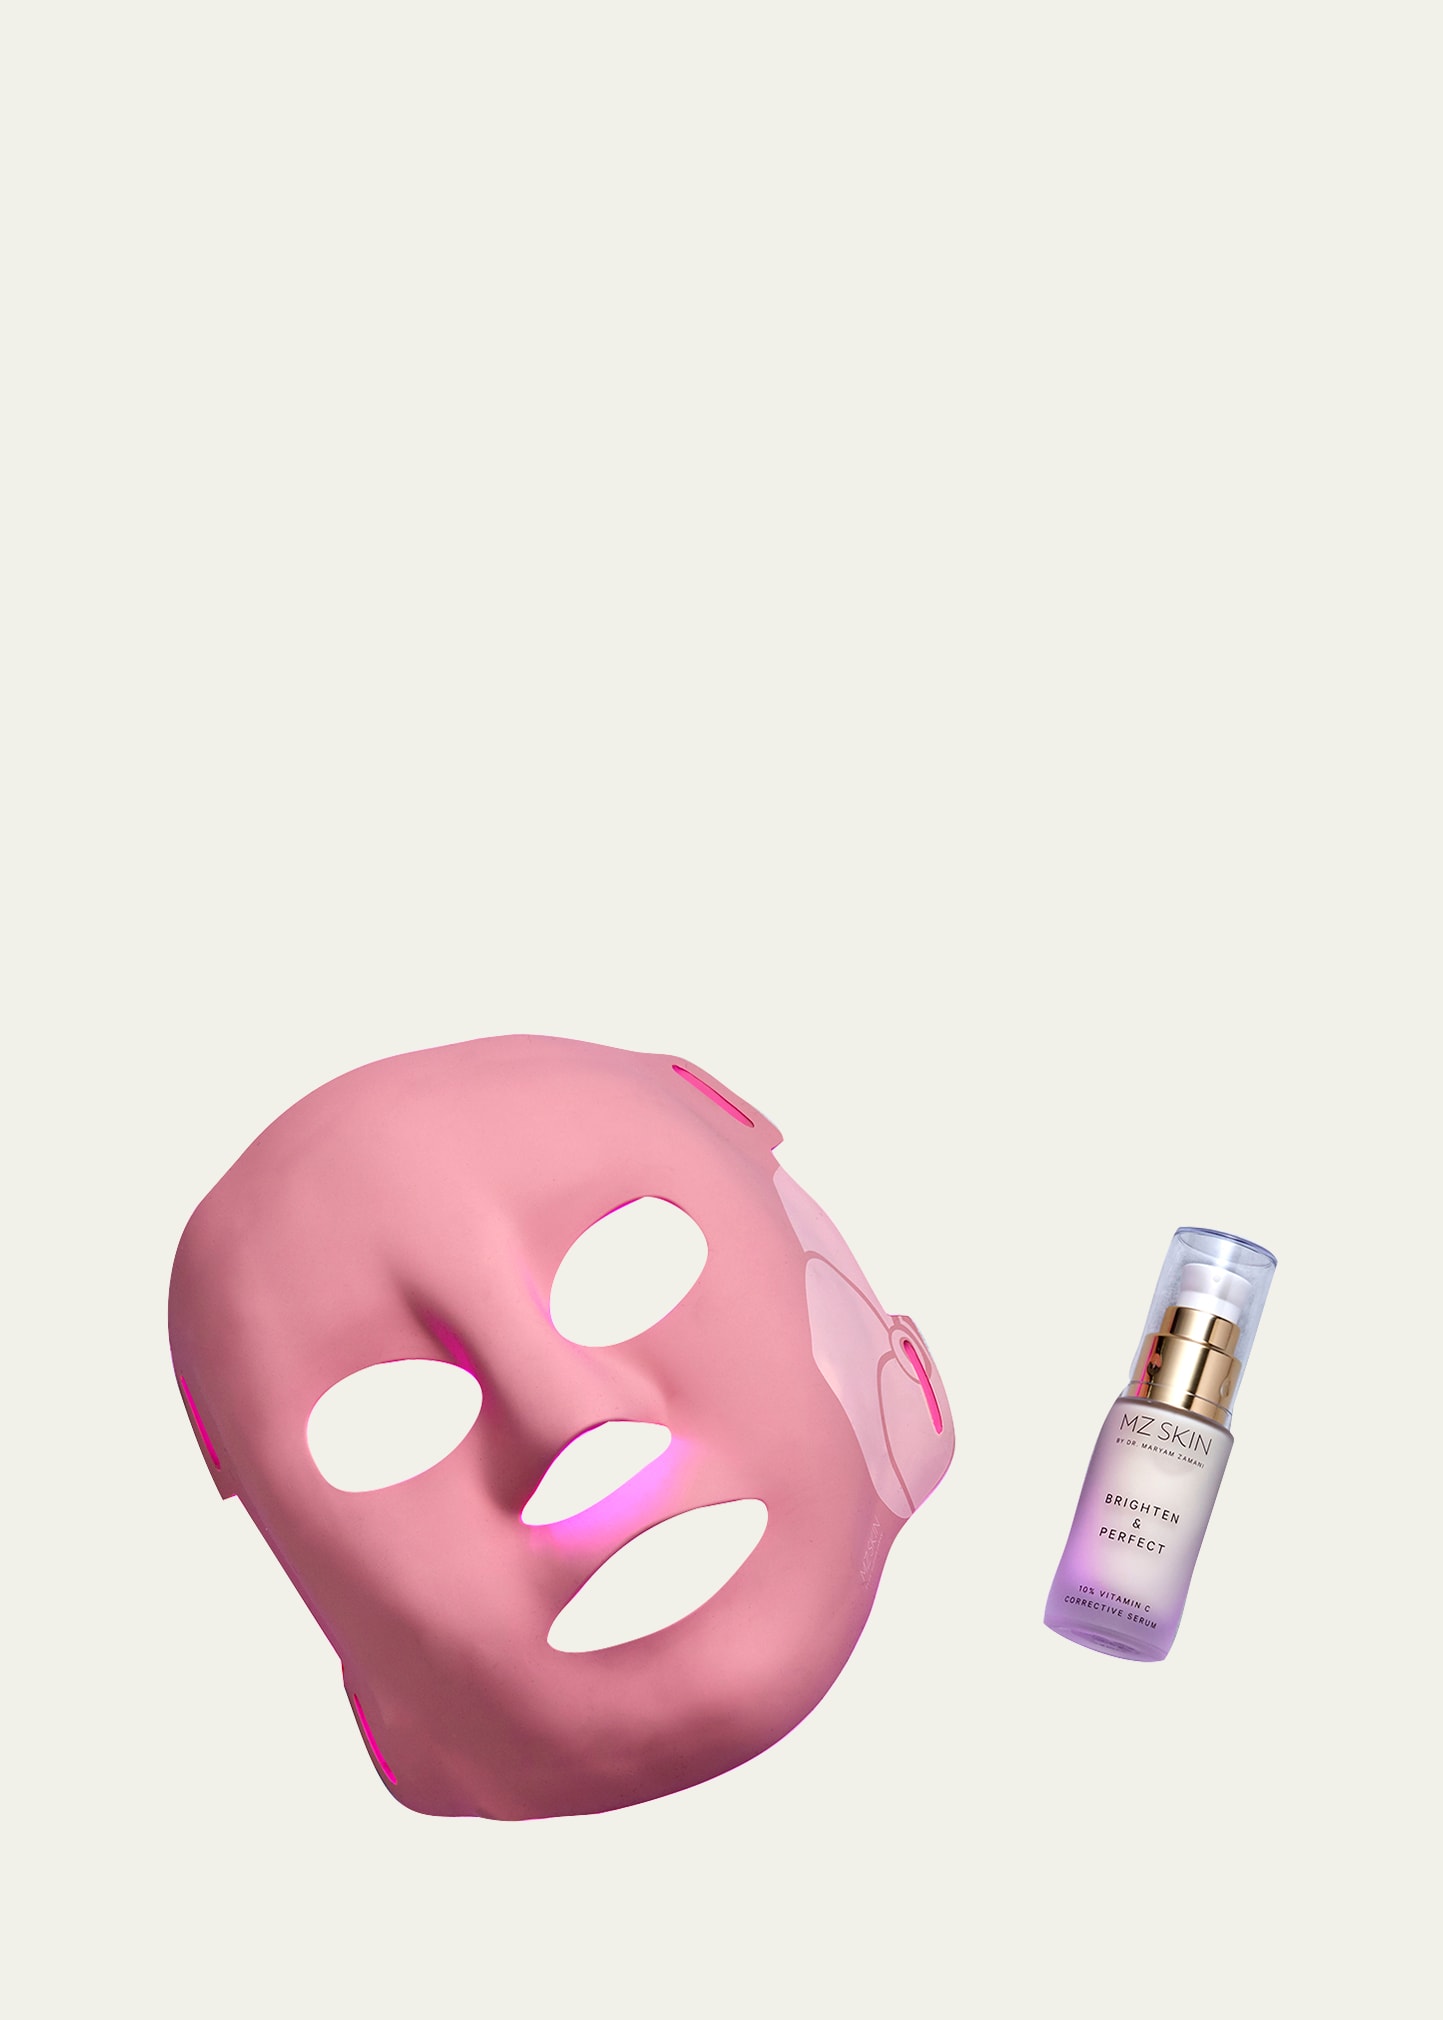 Mz Skin Led 2.0 Mask In White